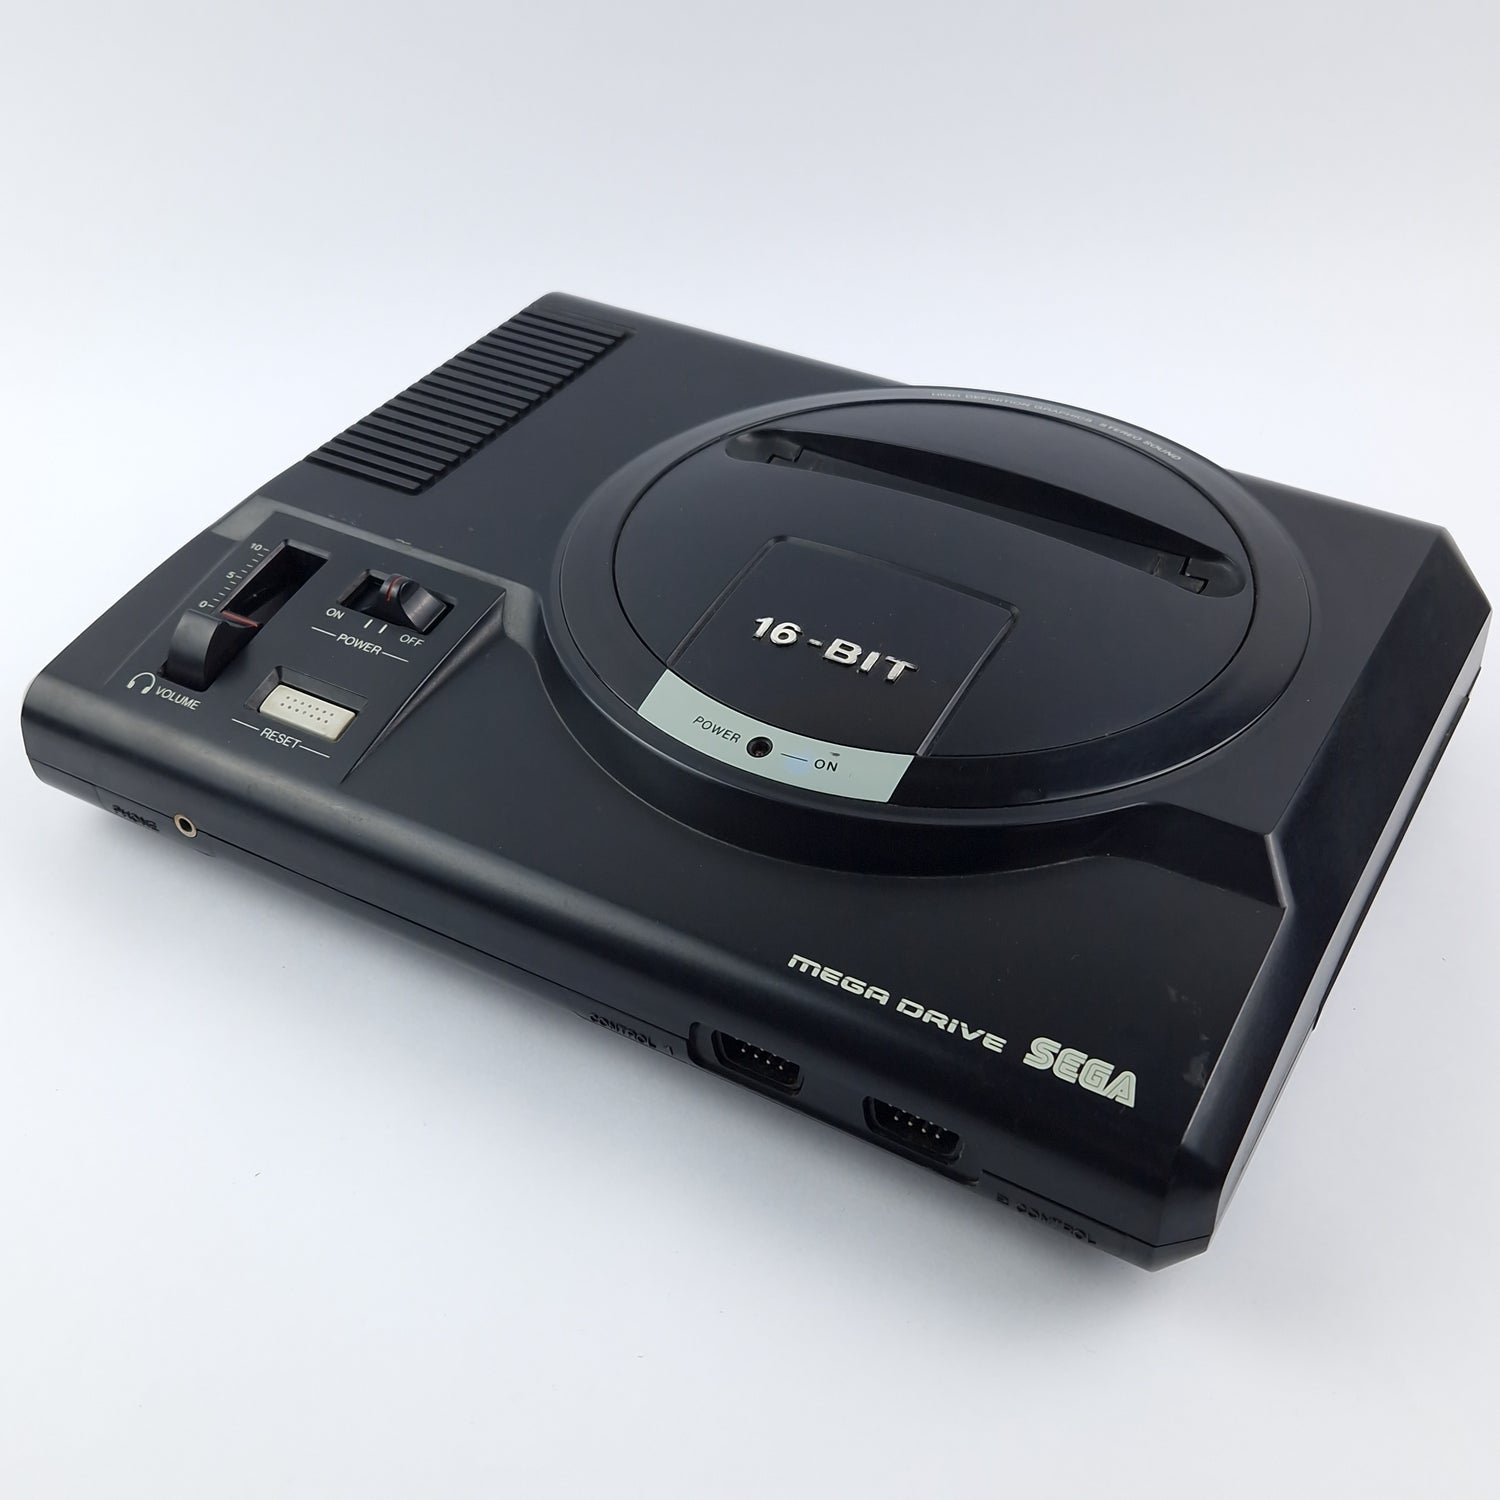 Sega Mega Drive I Konsole mit 2 Controller, 32X Adapter u. Stromkabel - Console